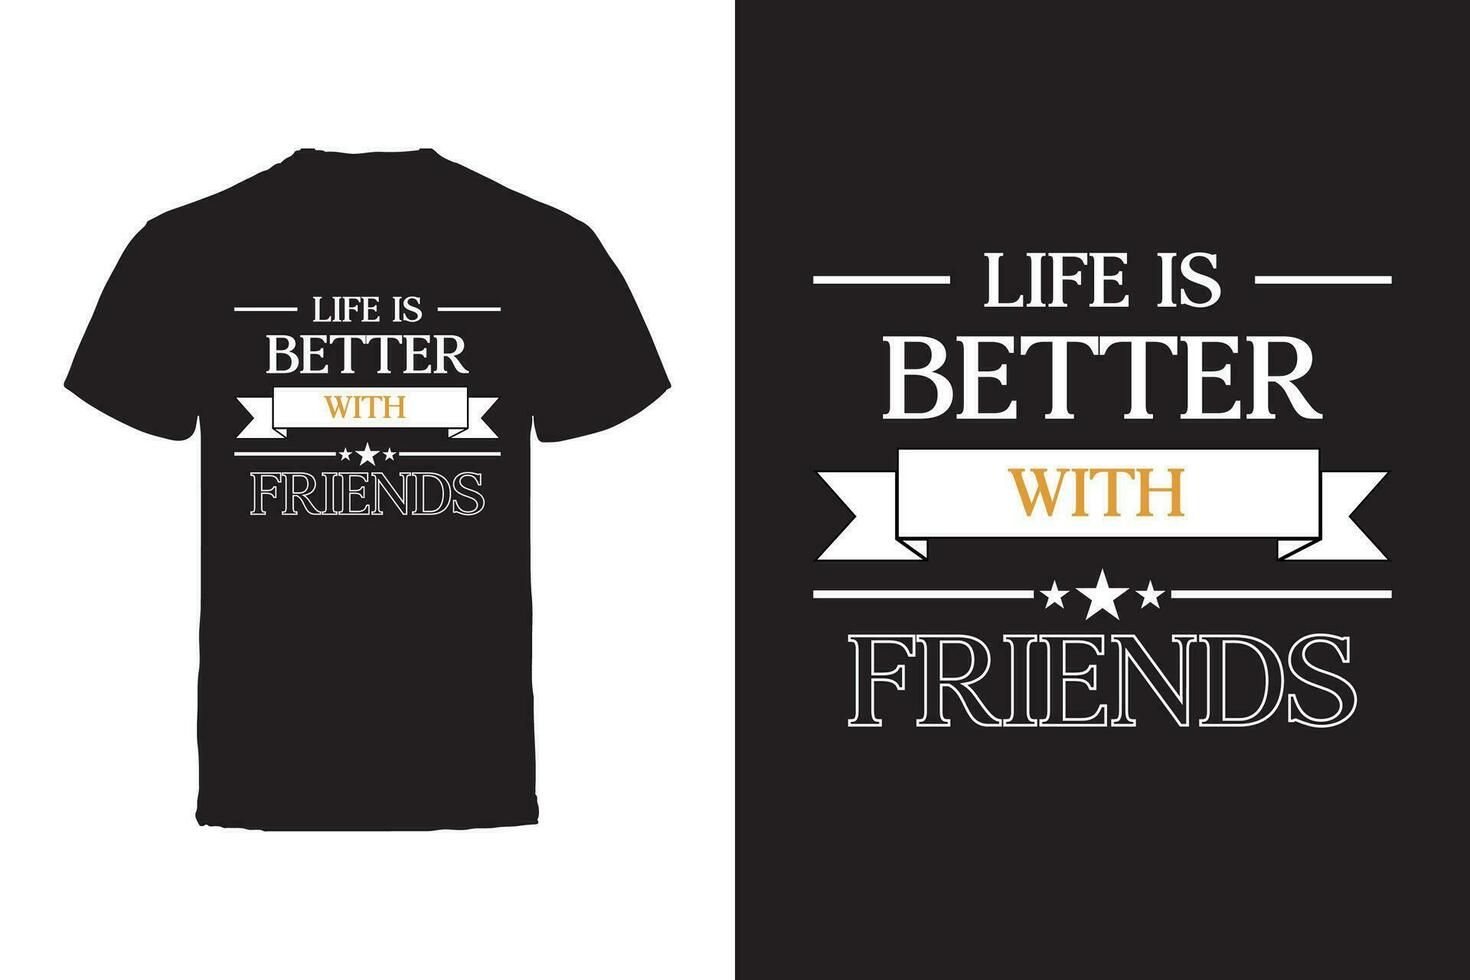 Vector T-shirt design. Friends and Friendship Typography Vector T-shirt design.